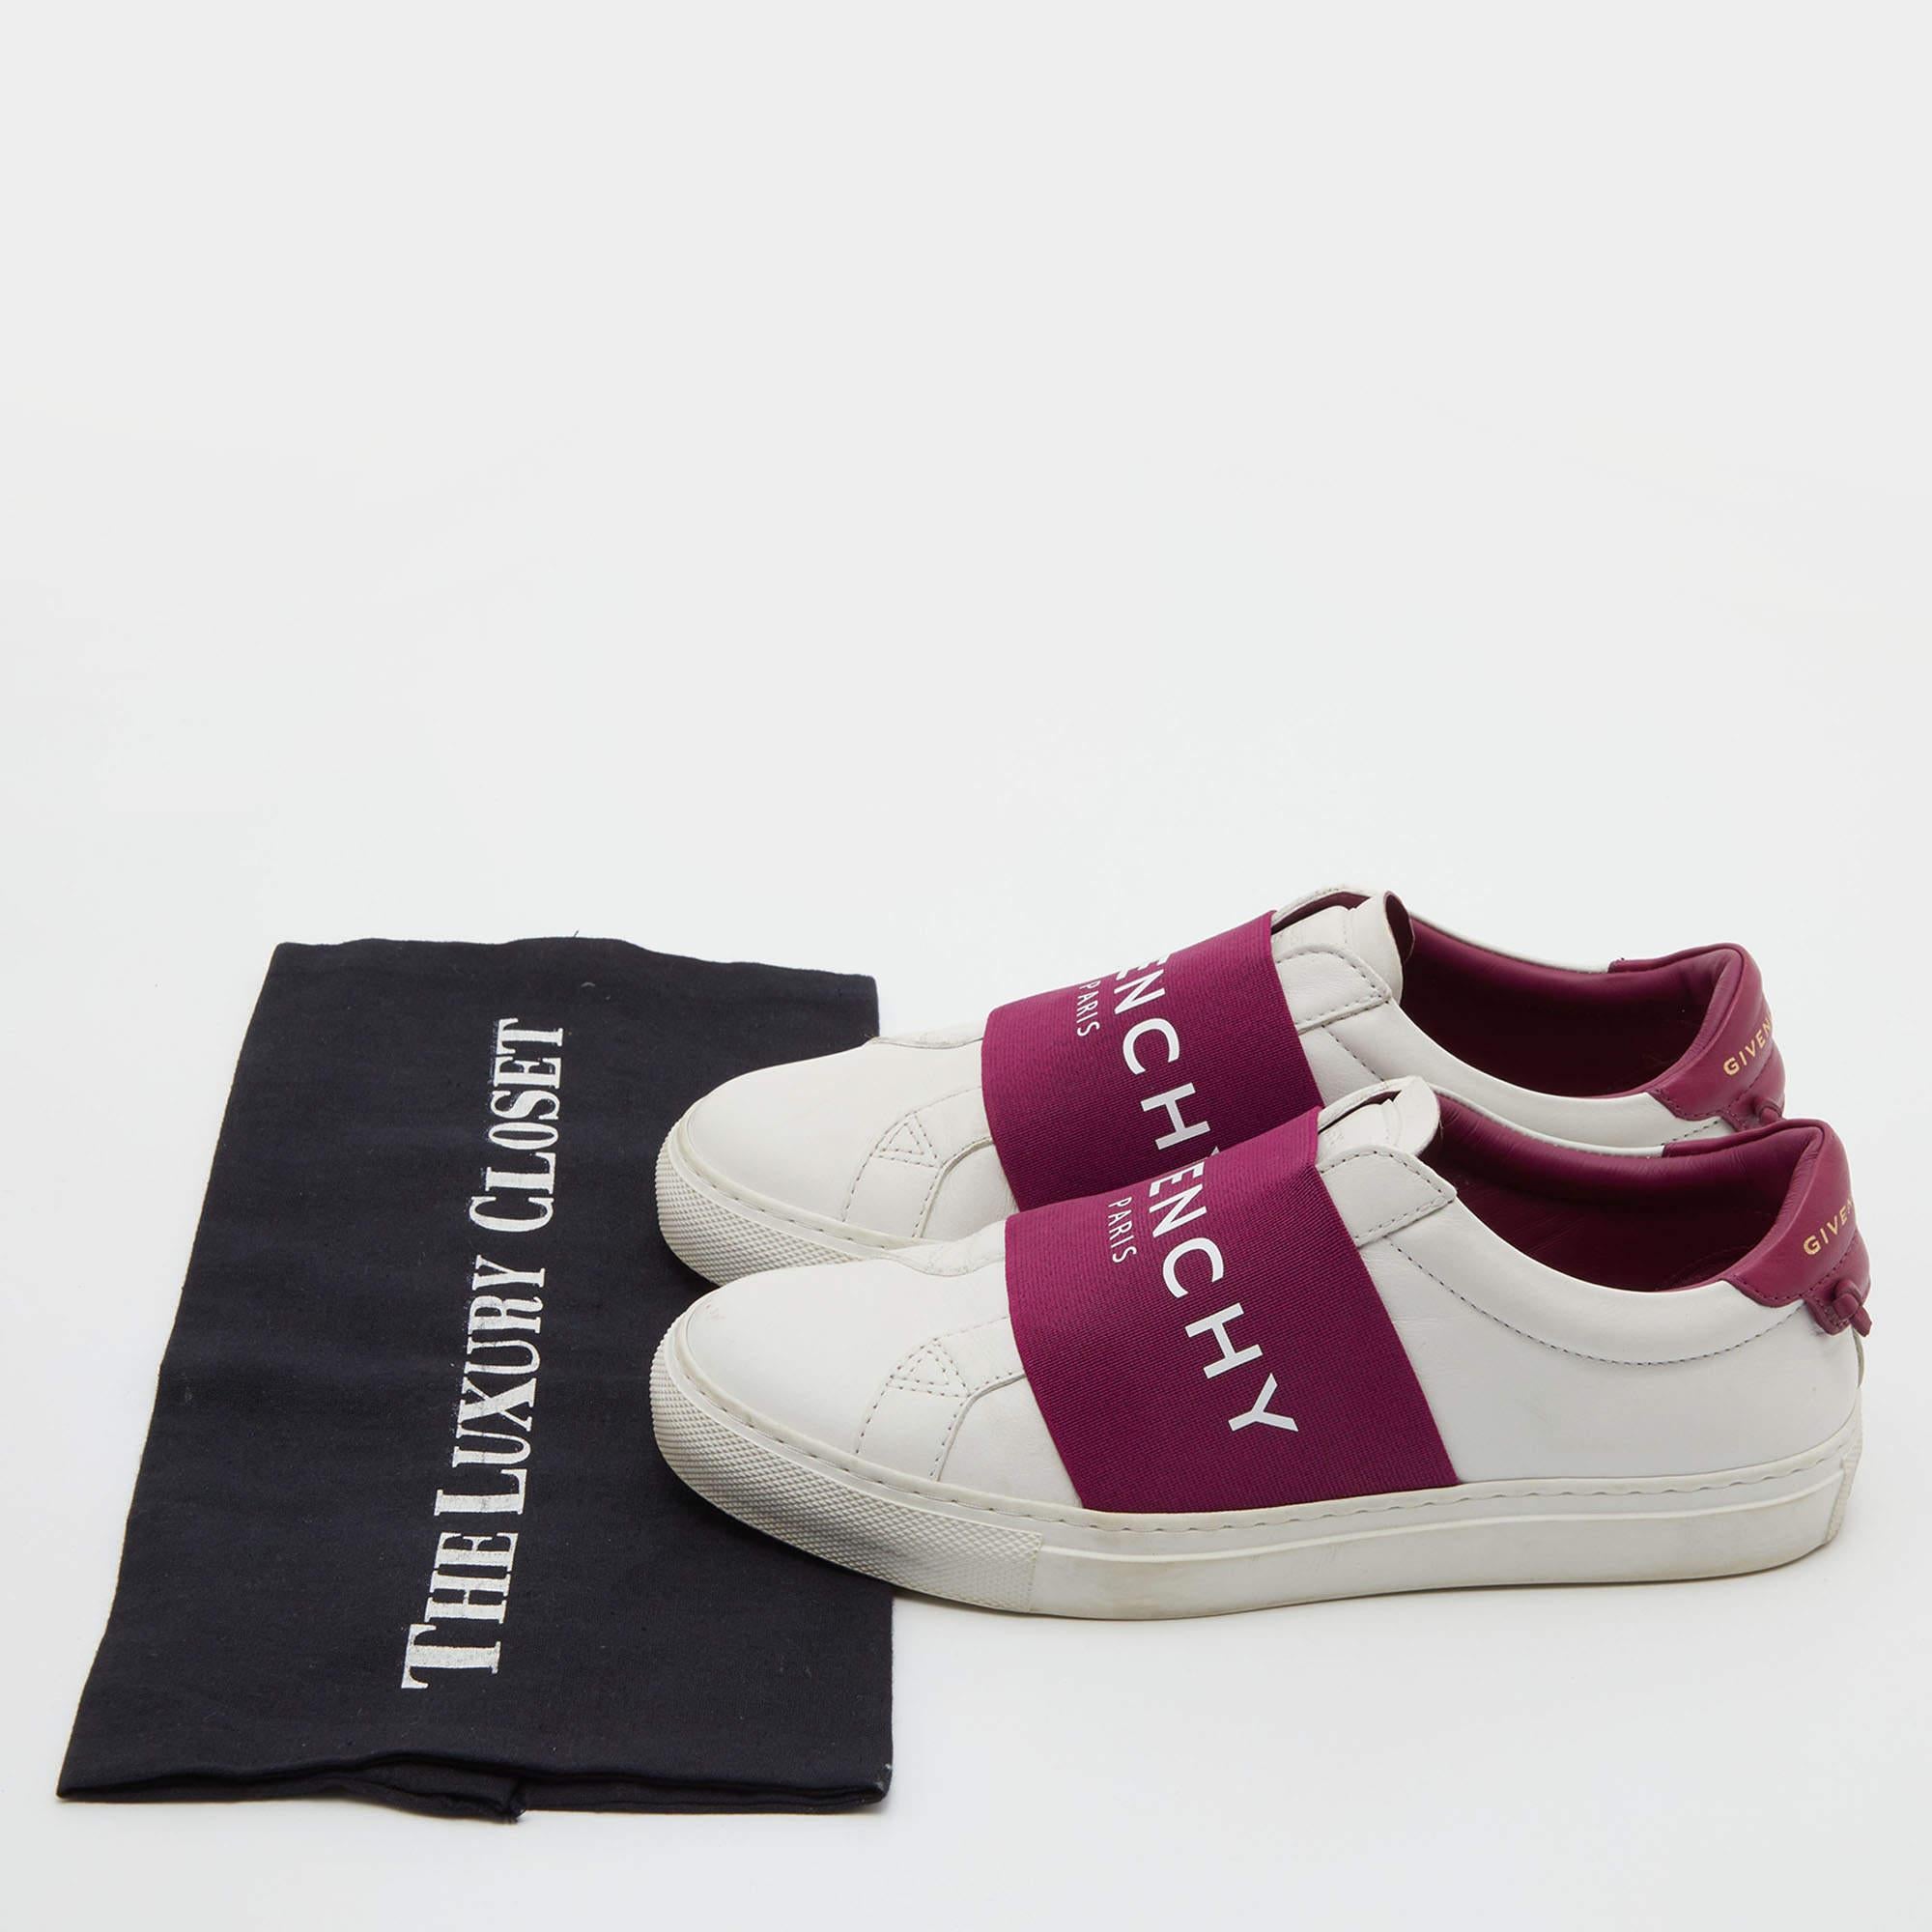 Givenchy White/Plum Leather Urban Street Slip On Sneakers Size 36 5